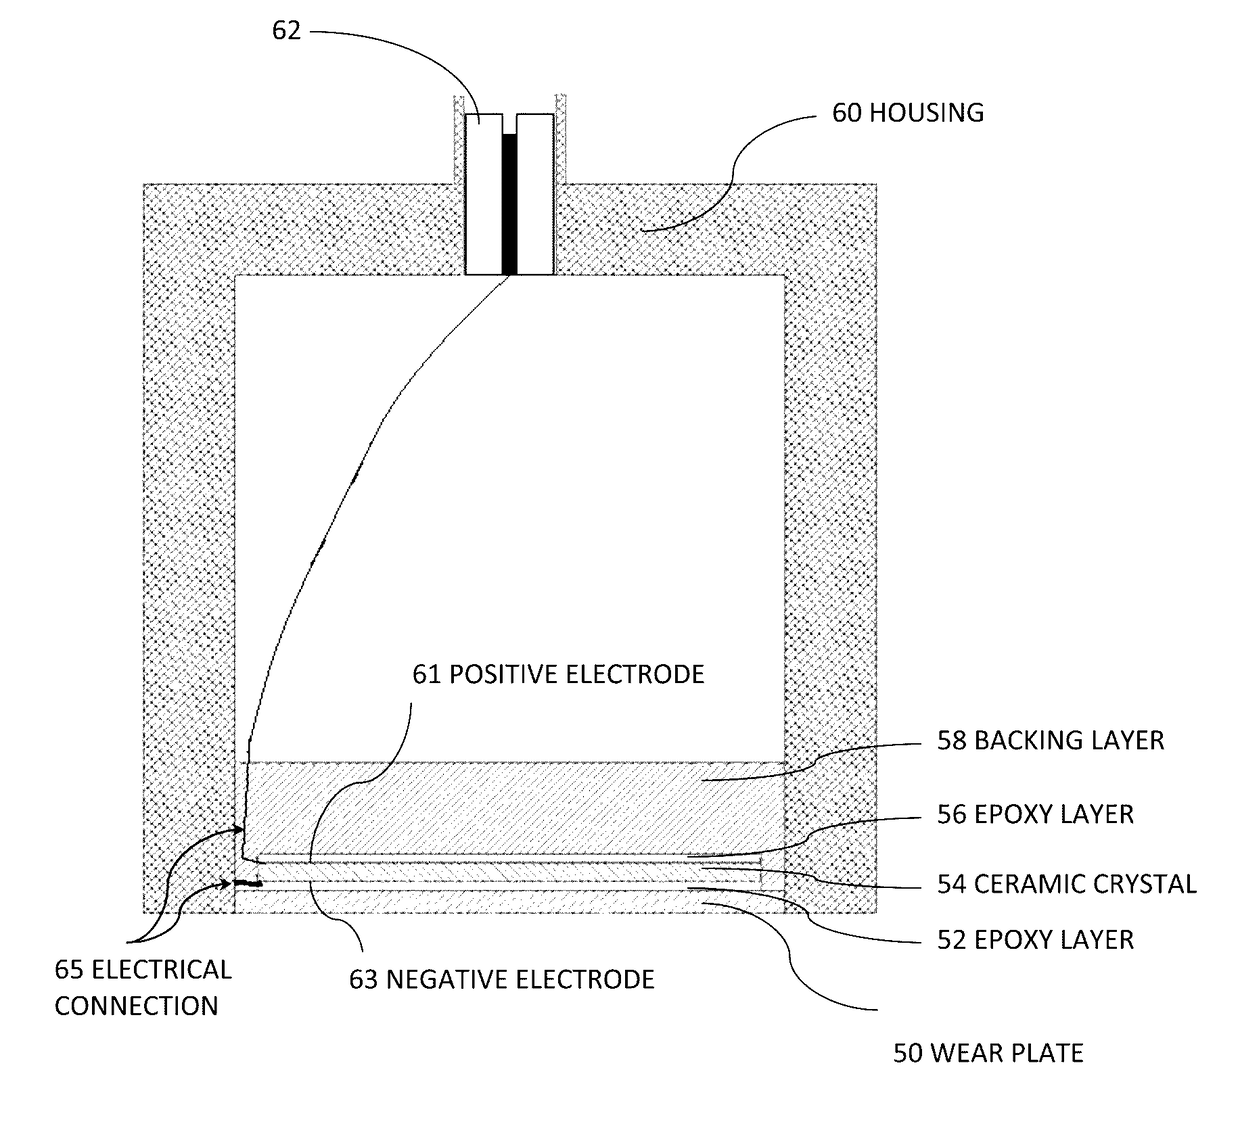 Acoustic bioreactor processes